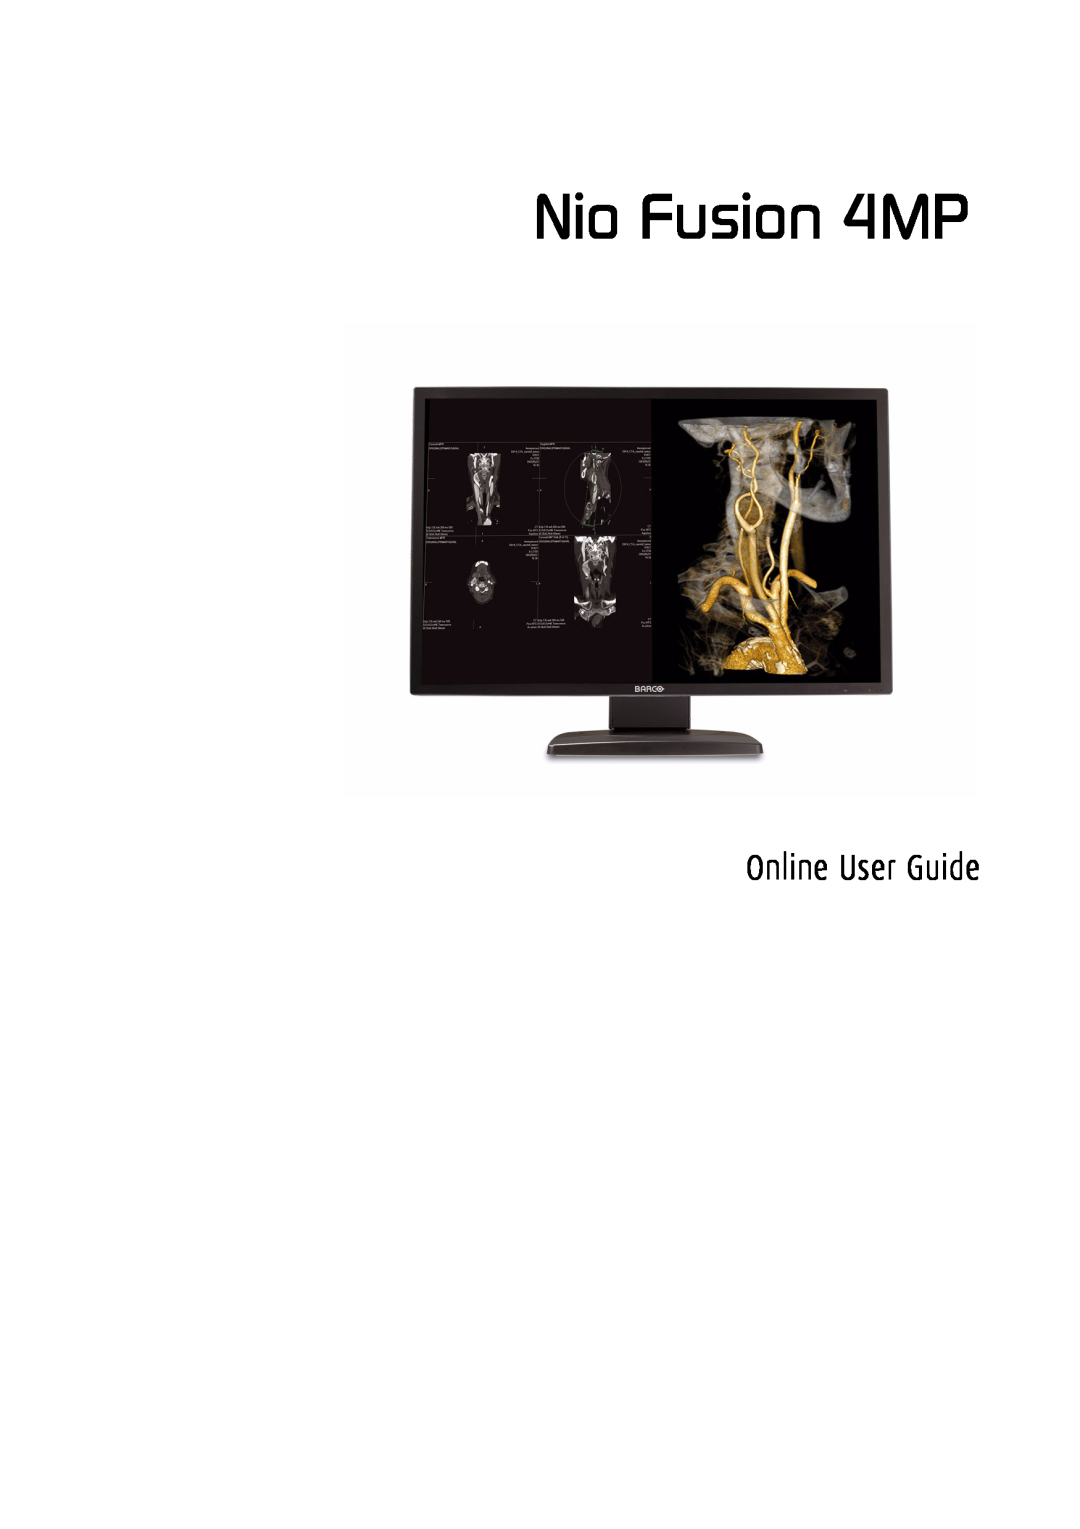 Barco manual Nio Fusion 4MP, Online User Guide 